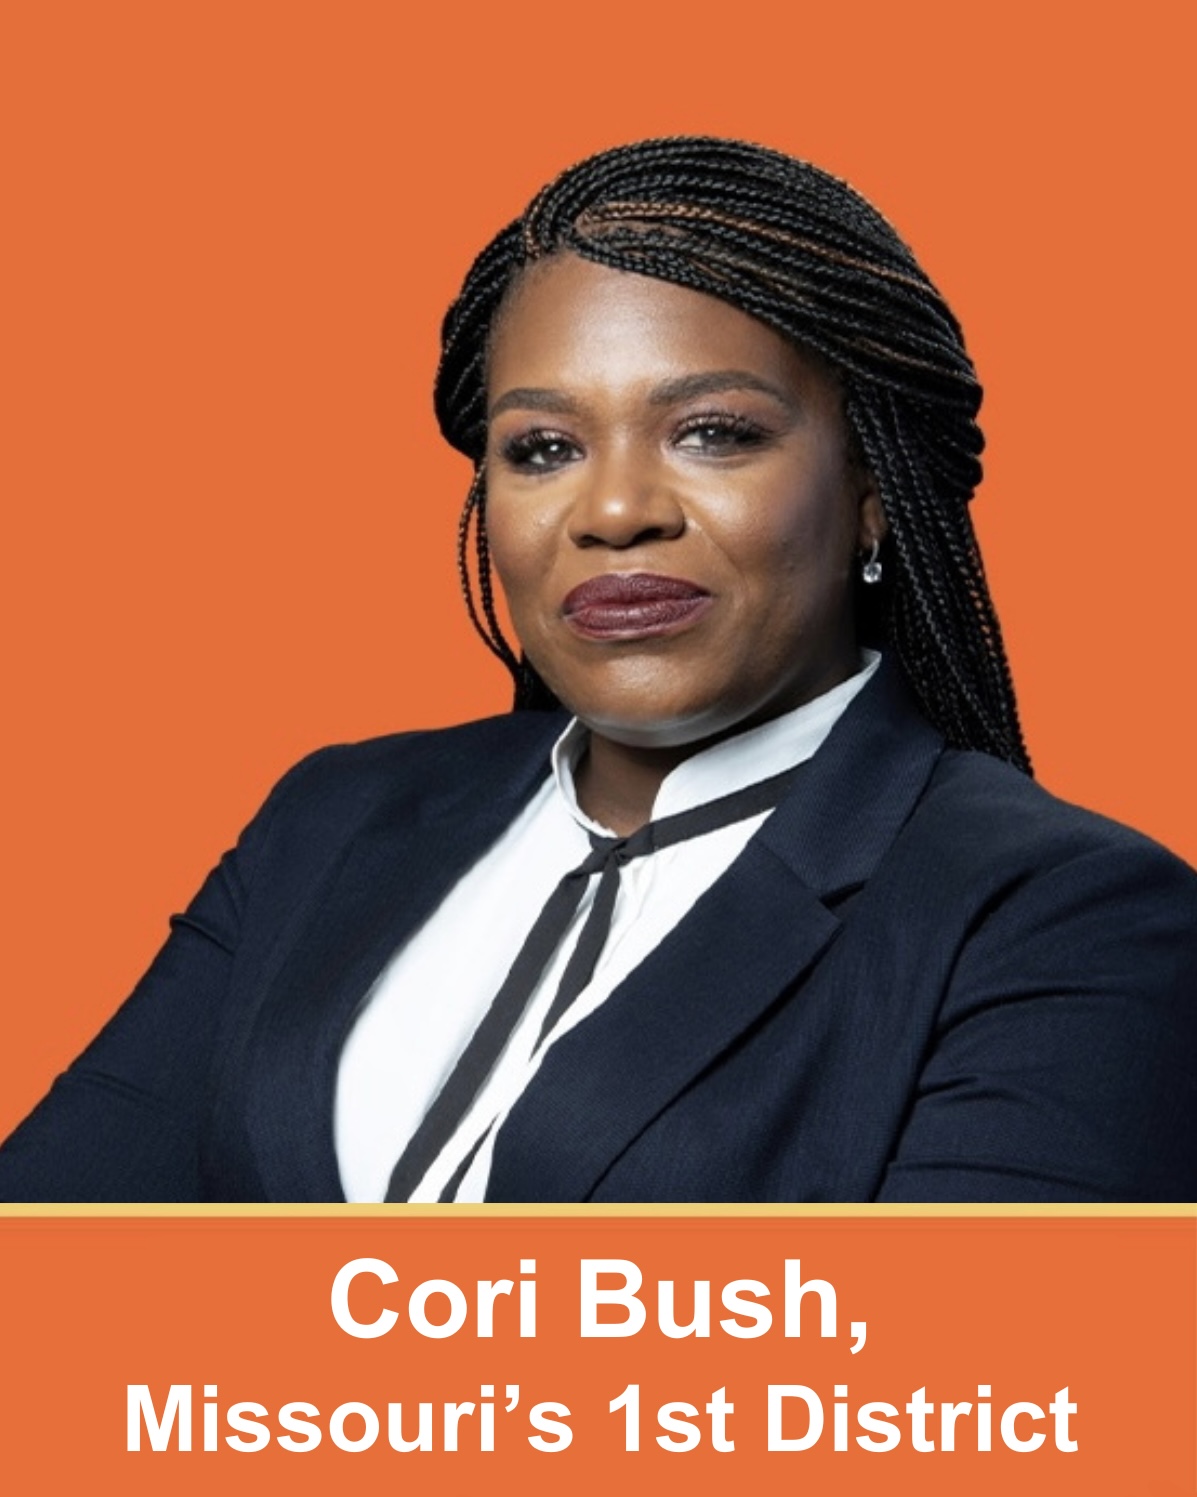 Cori Bush, Missouri's 1st District